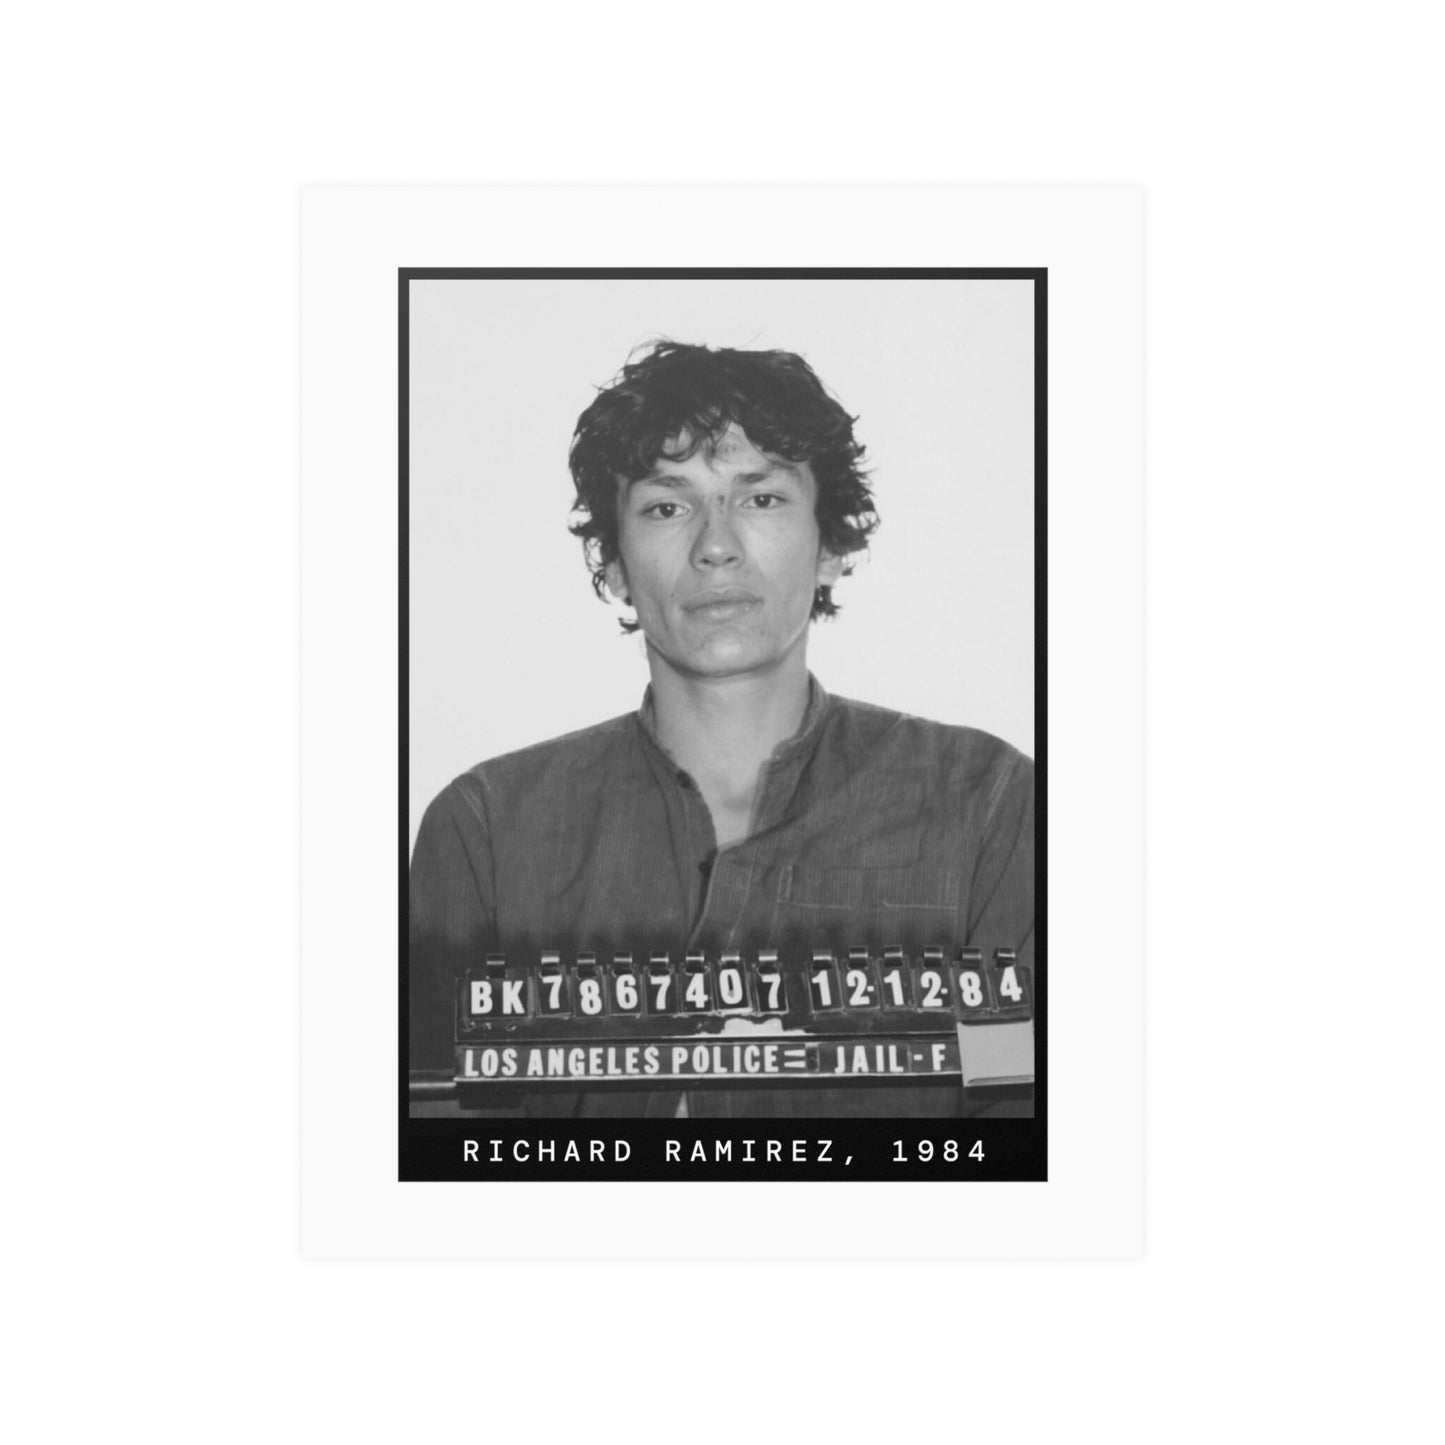 Richard Ramirez, 1984 Serial Killer Mugshot Poster